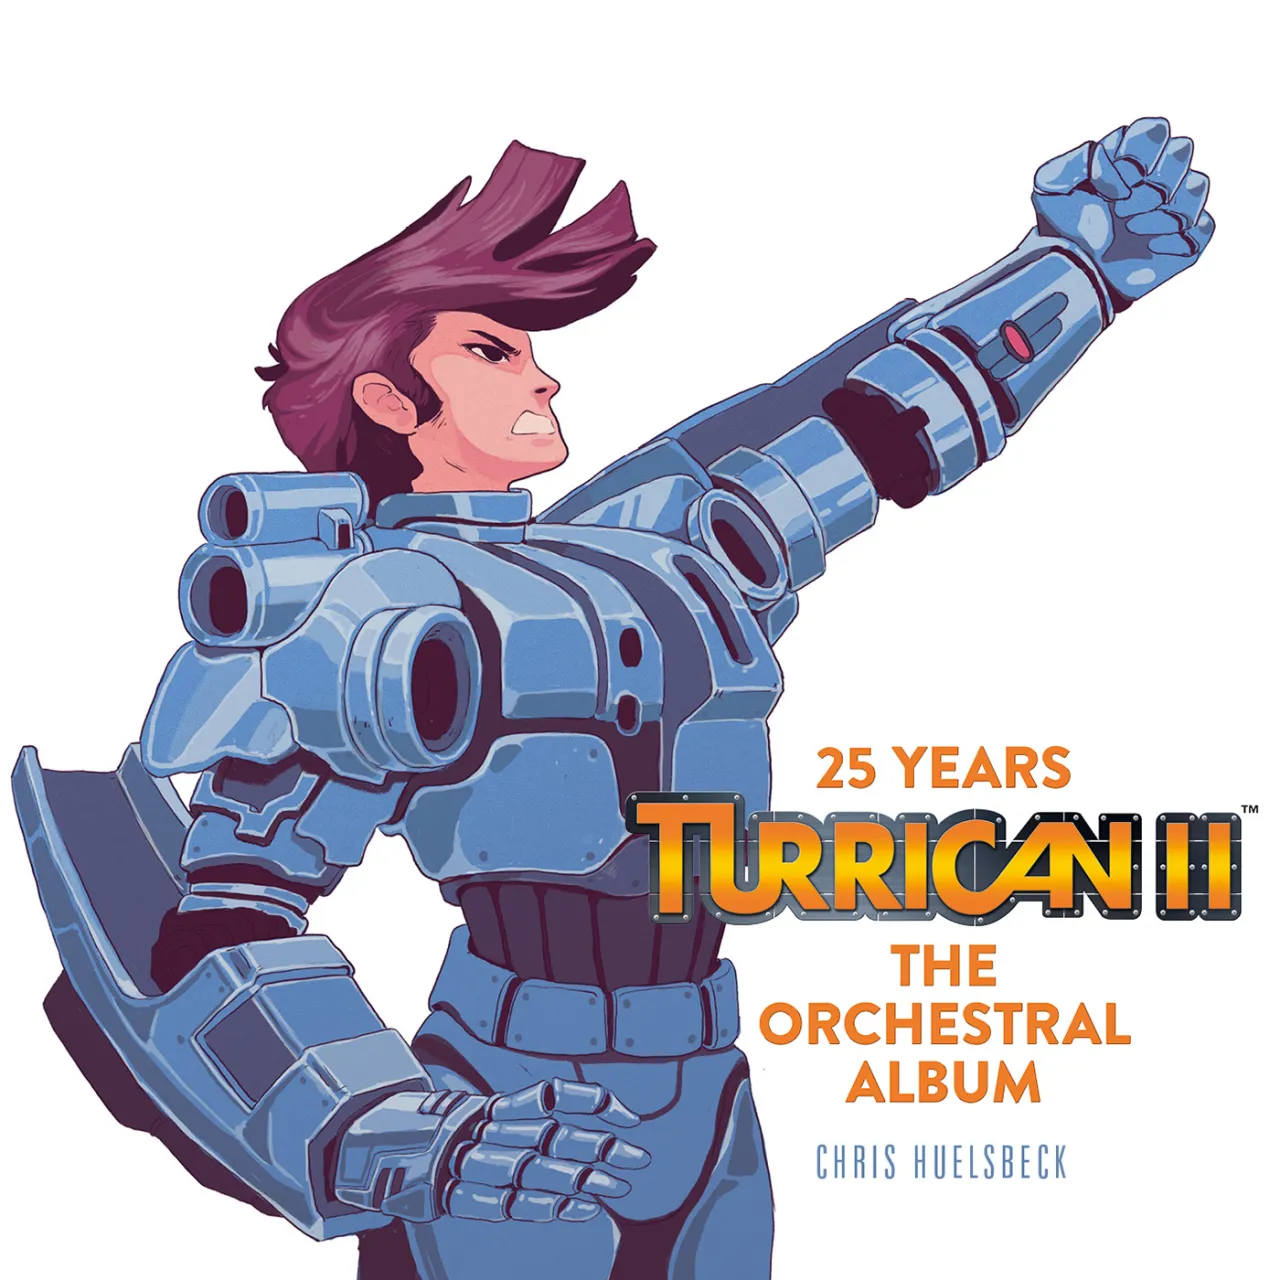 Turrcani II - The Orchestral Album